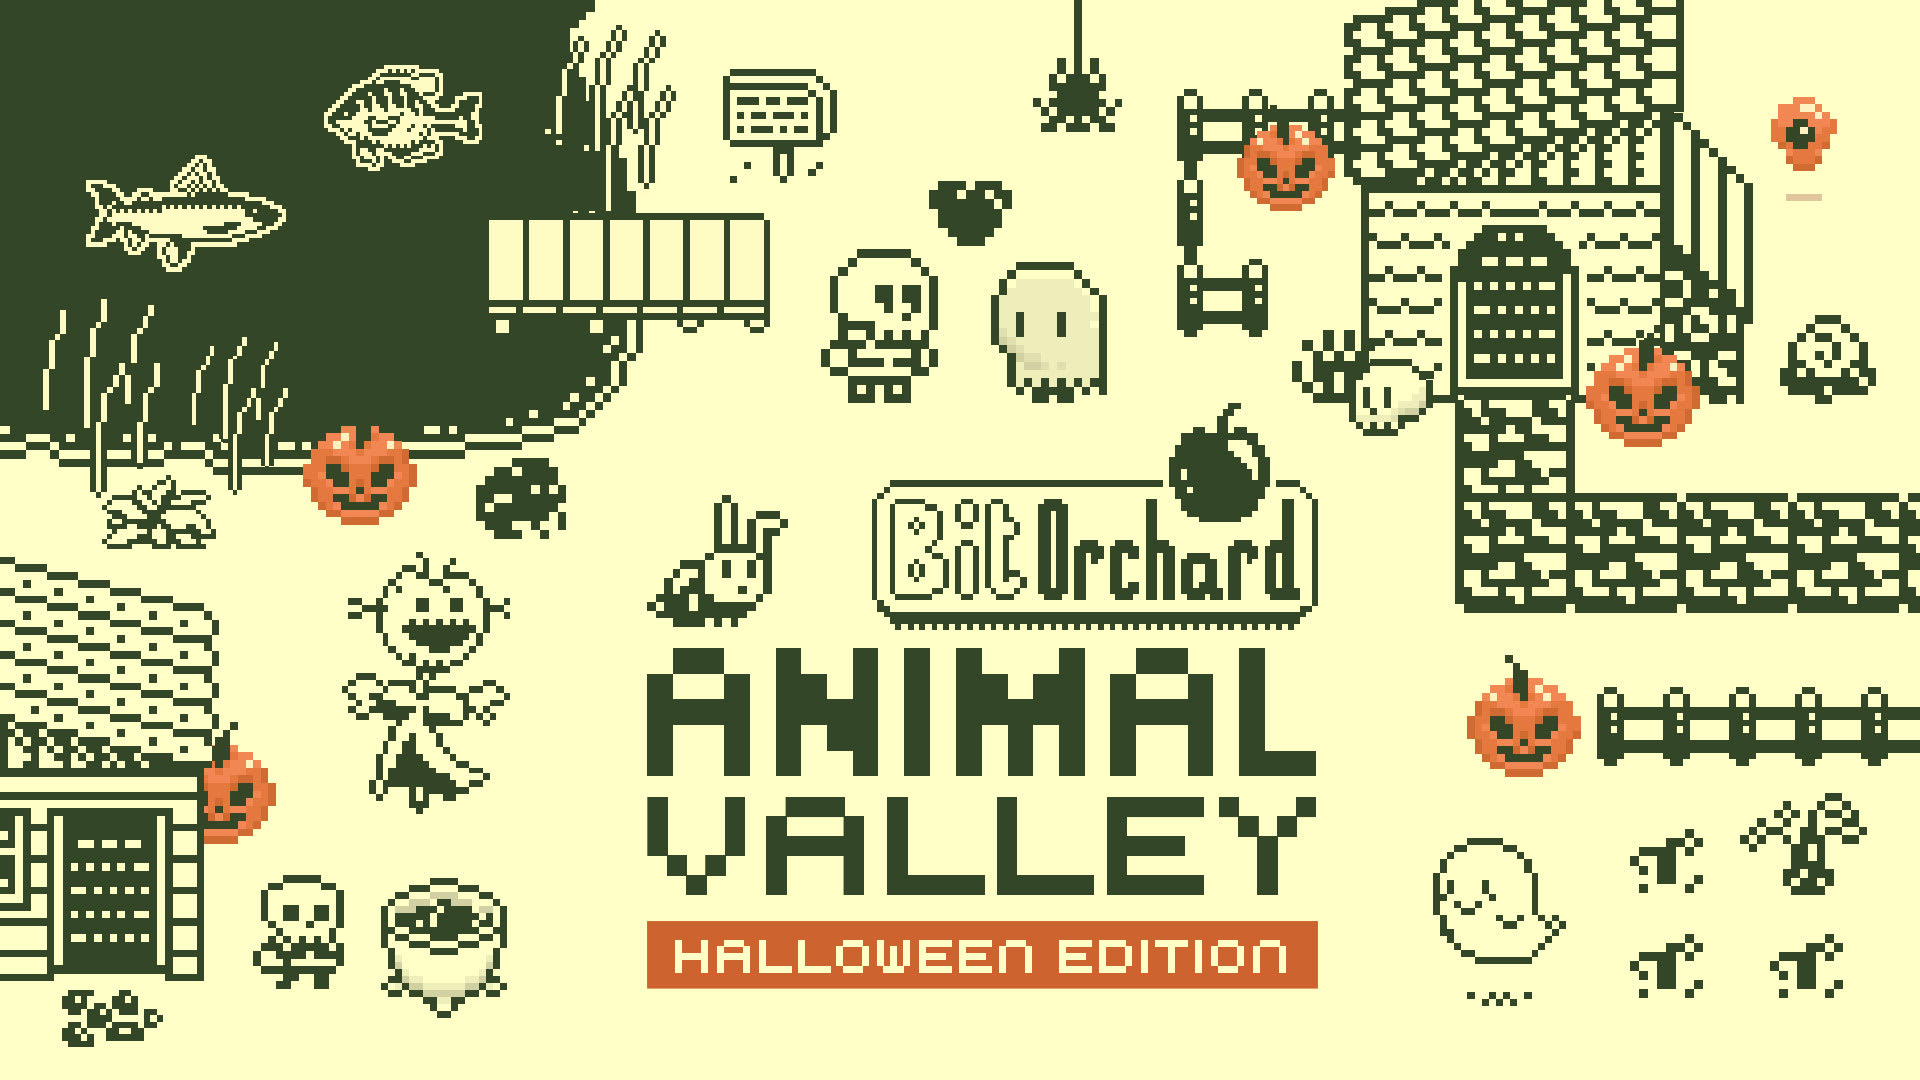 Bit Orchard: Animal Valley Halloween Edition